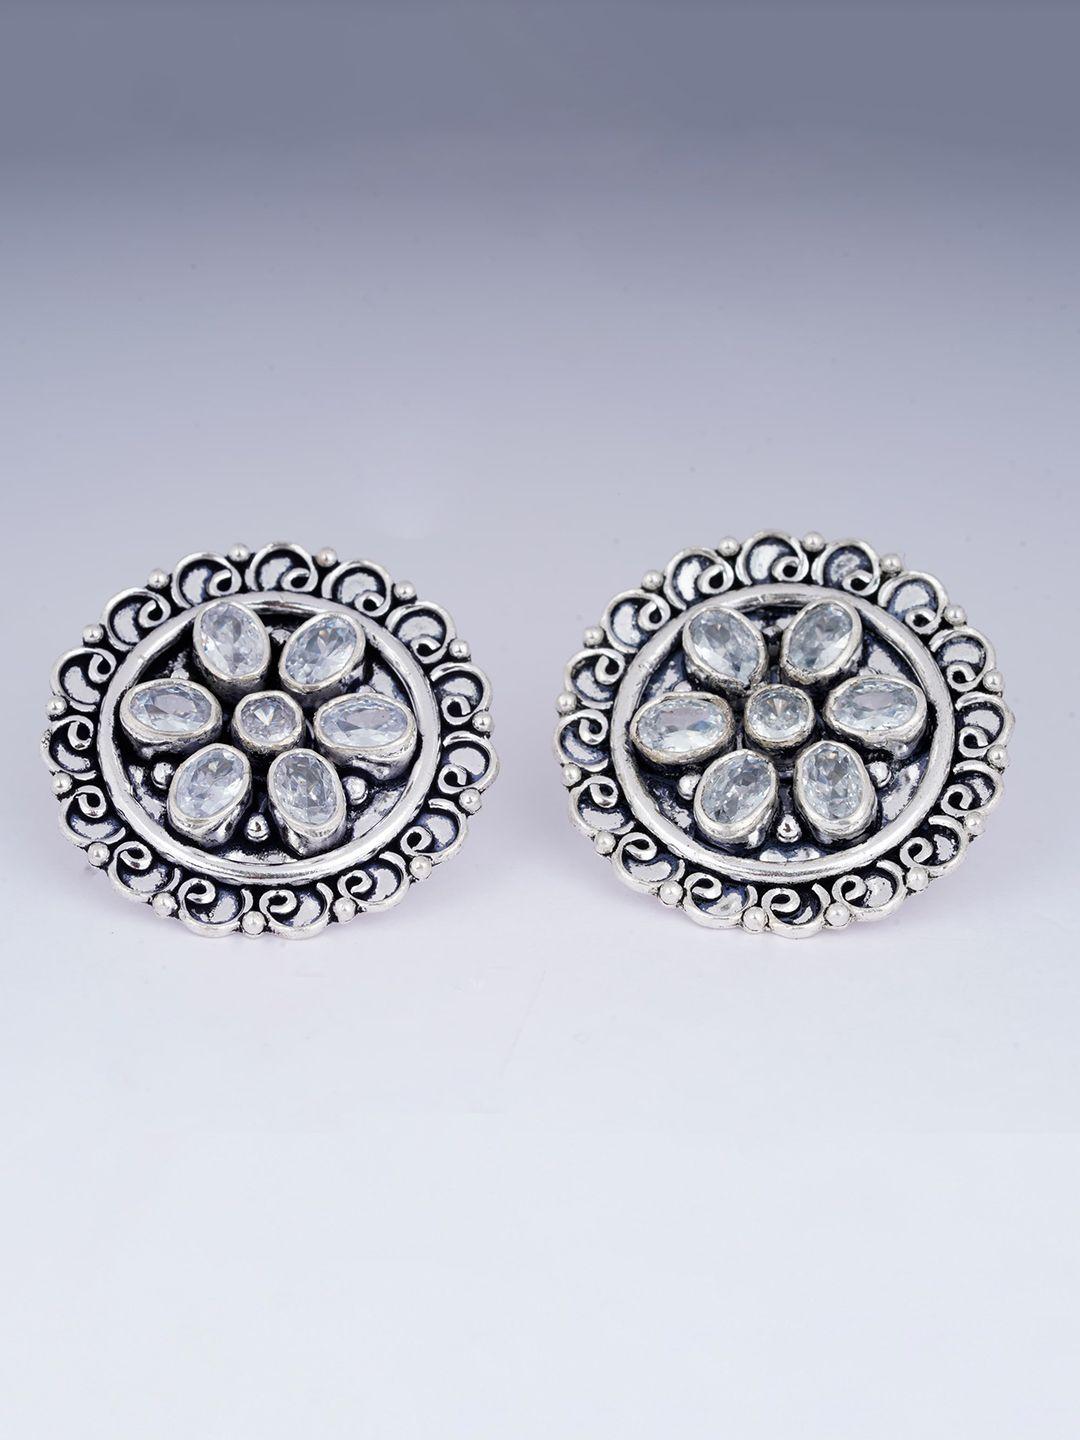 925 siller rhodium-plated pure silver circular studs earrings